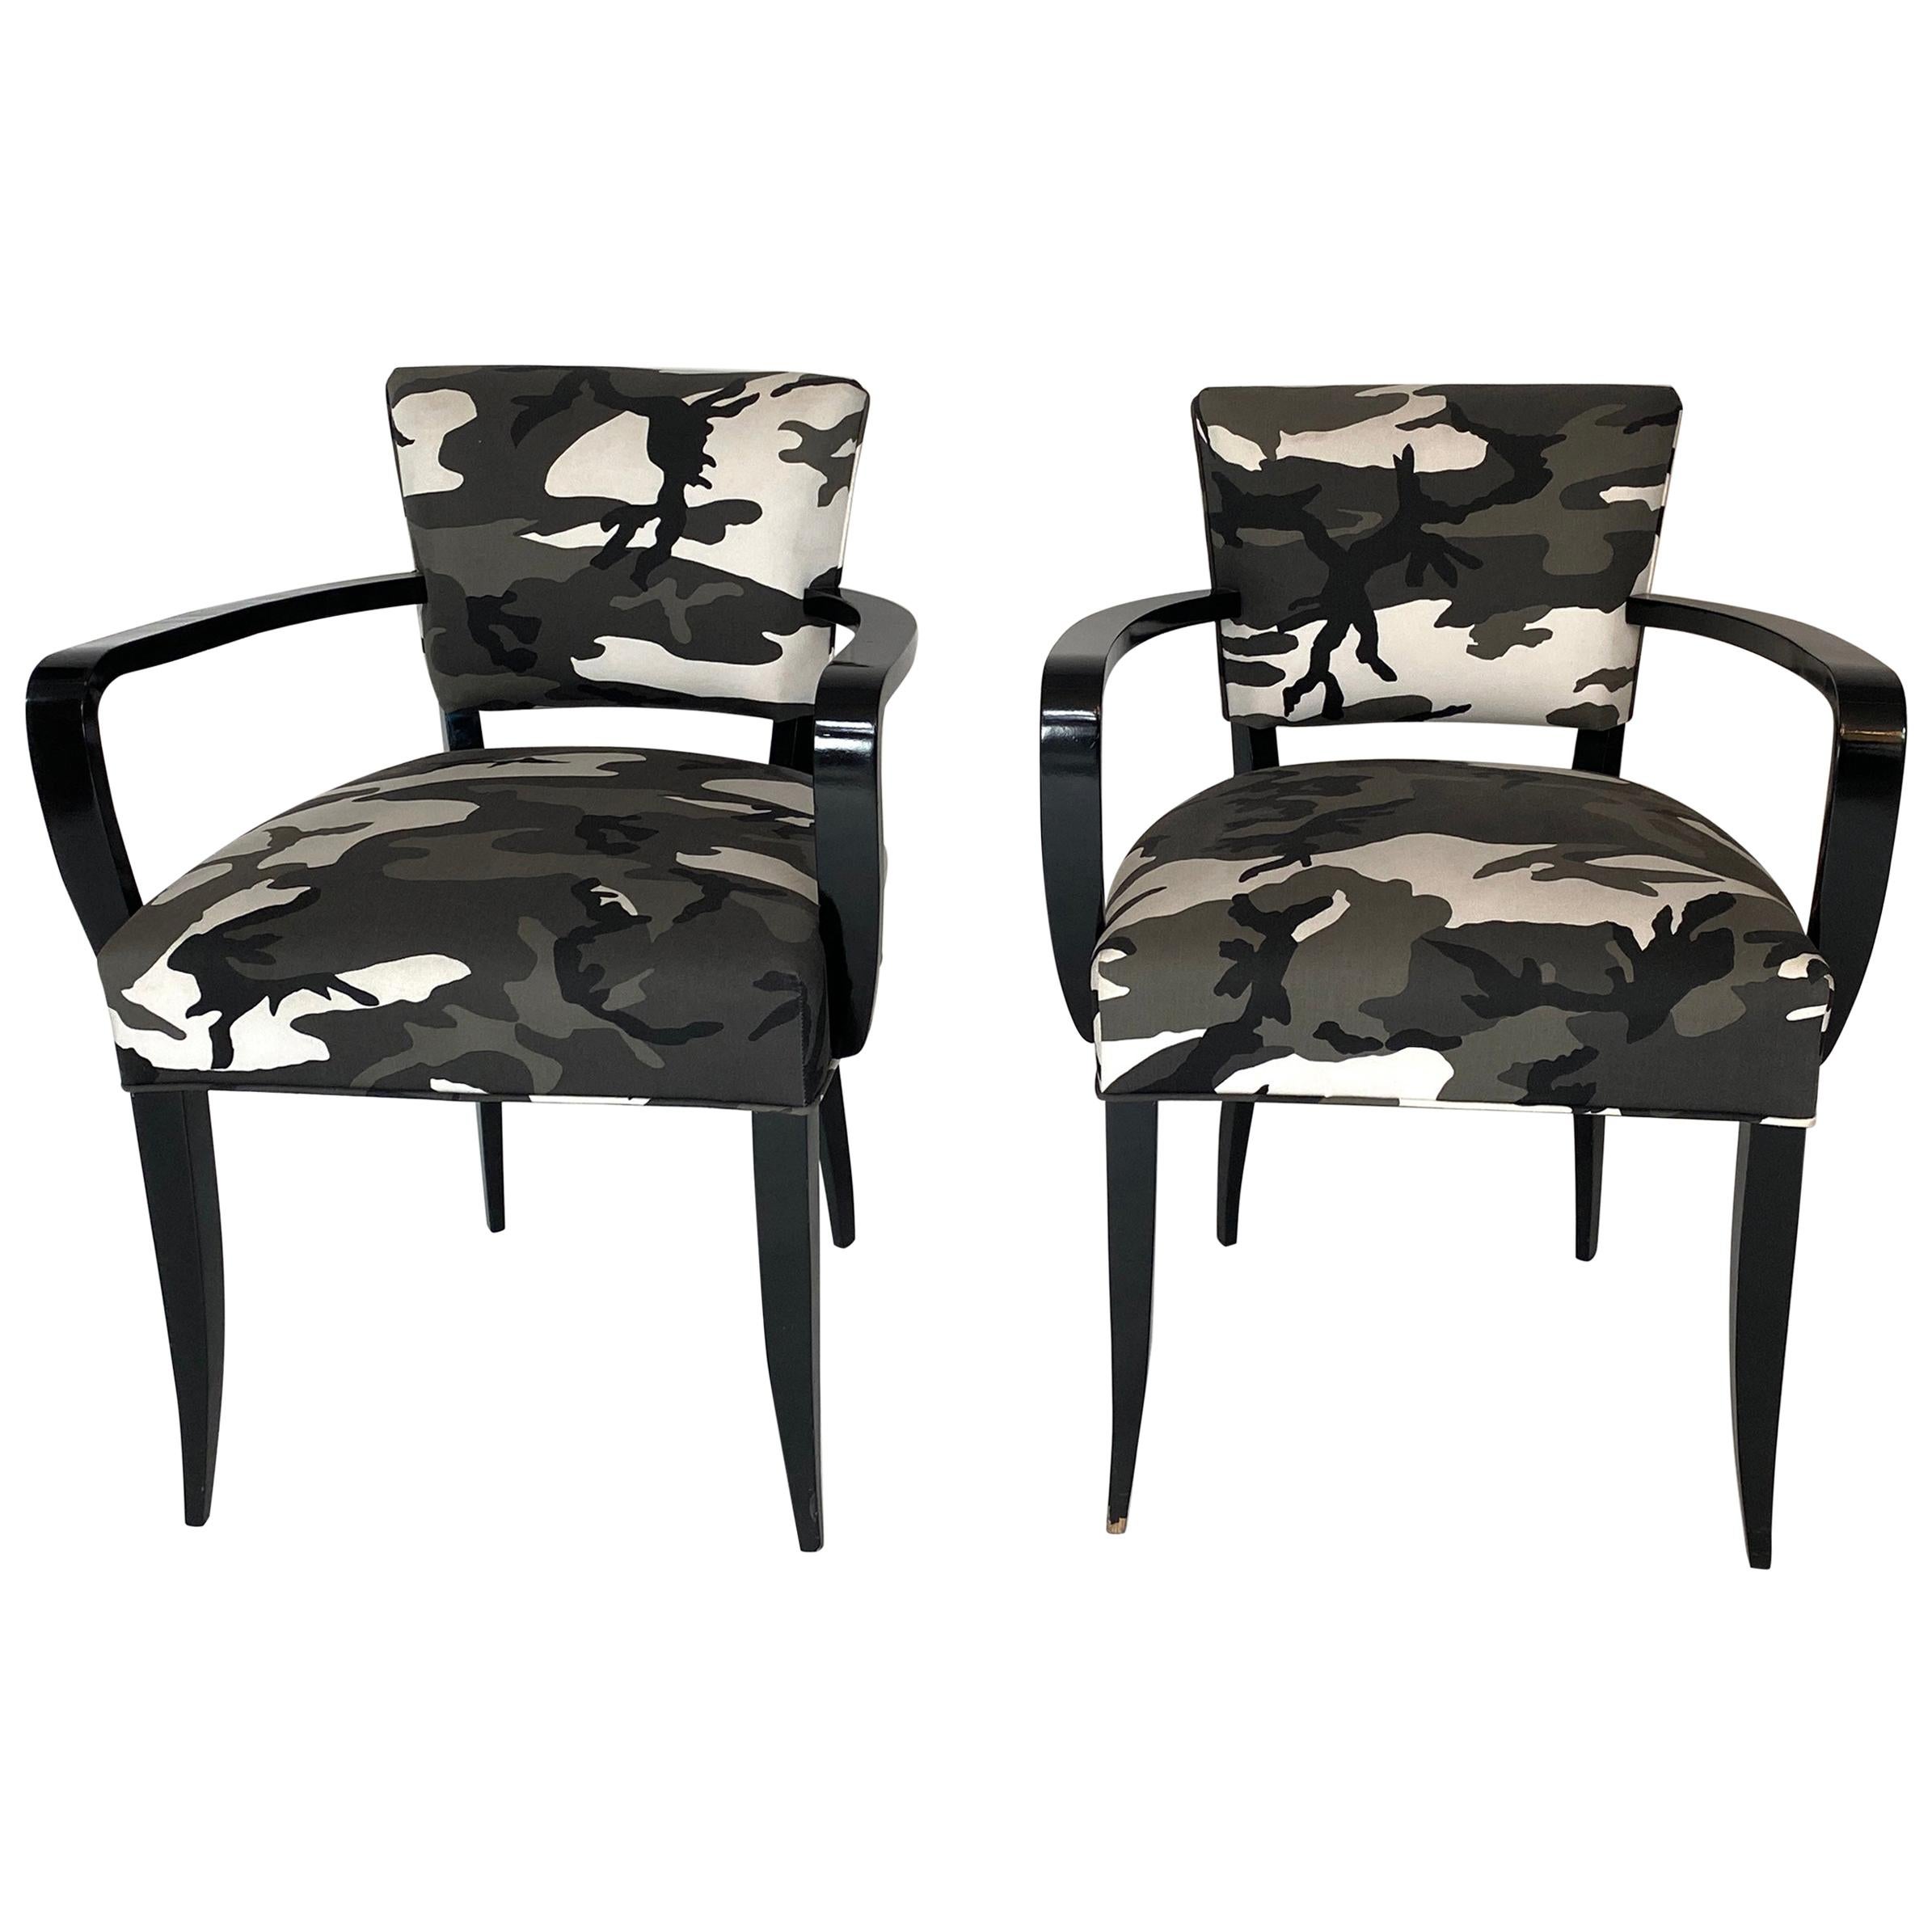 Pair of Bridge Chairs, Urban Camo For Sale